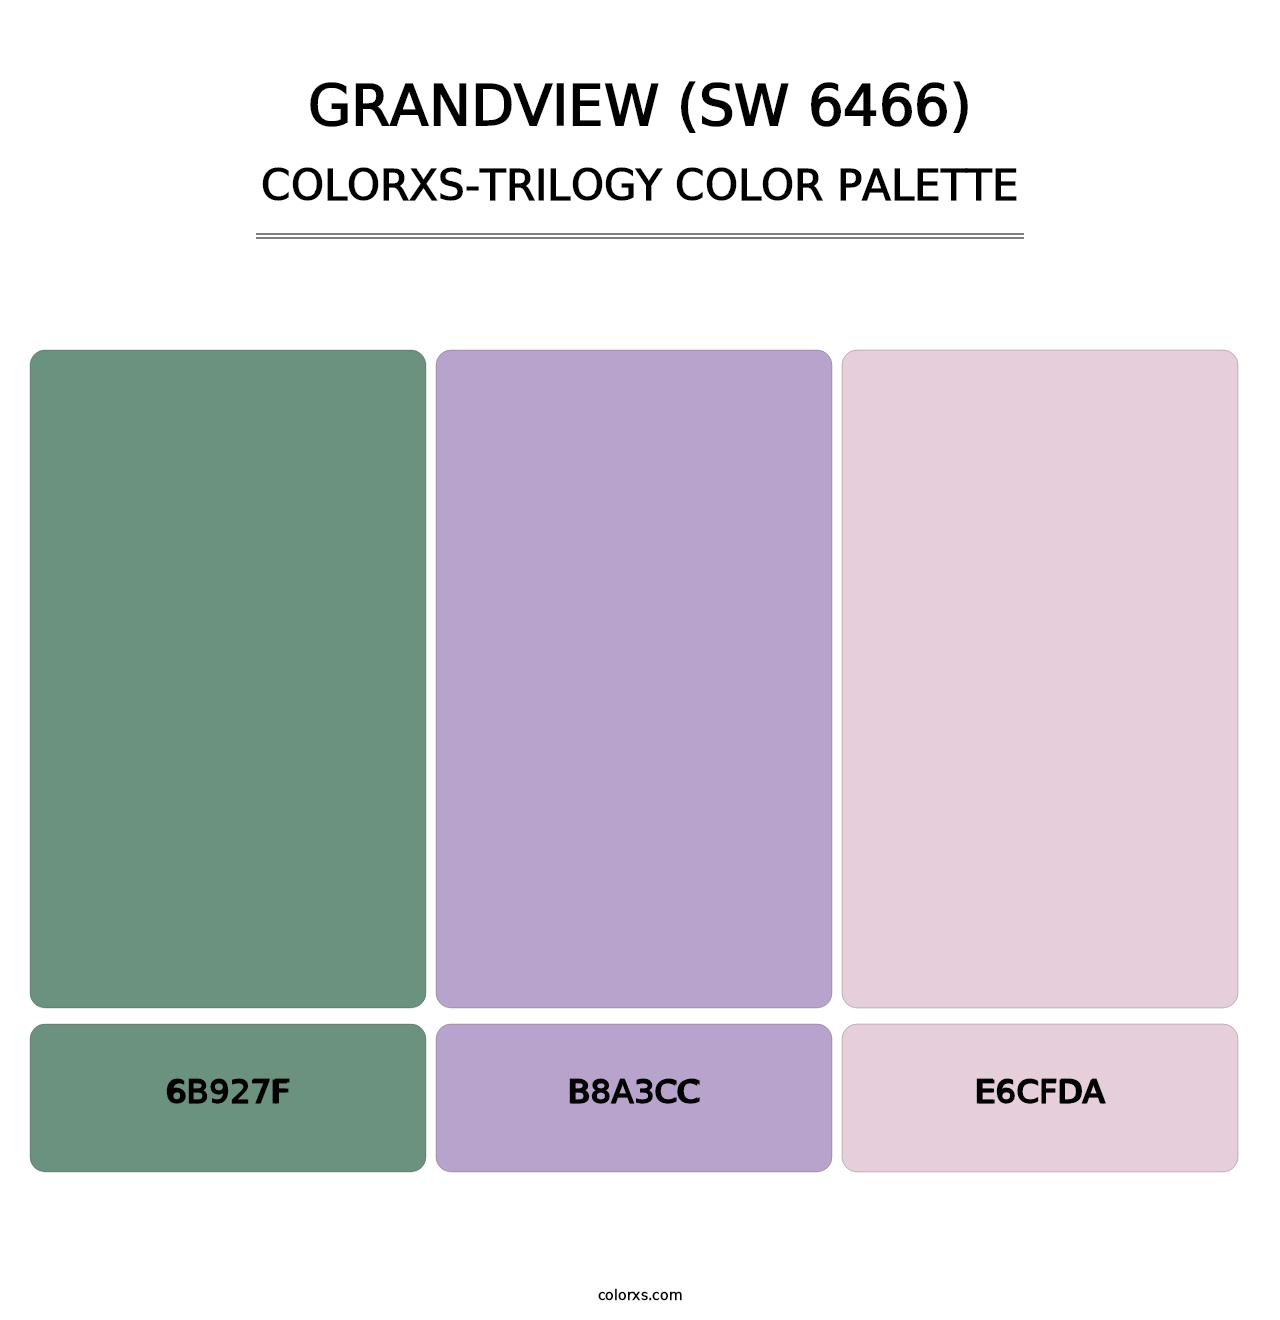 Grandview (SW 6466) - Colorxs Trilogy Palette